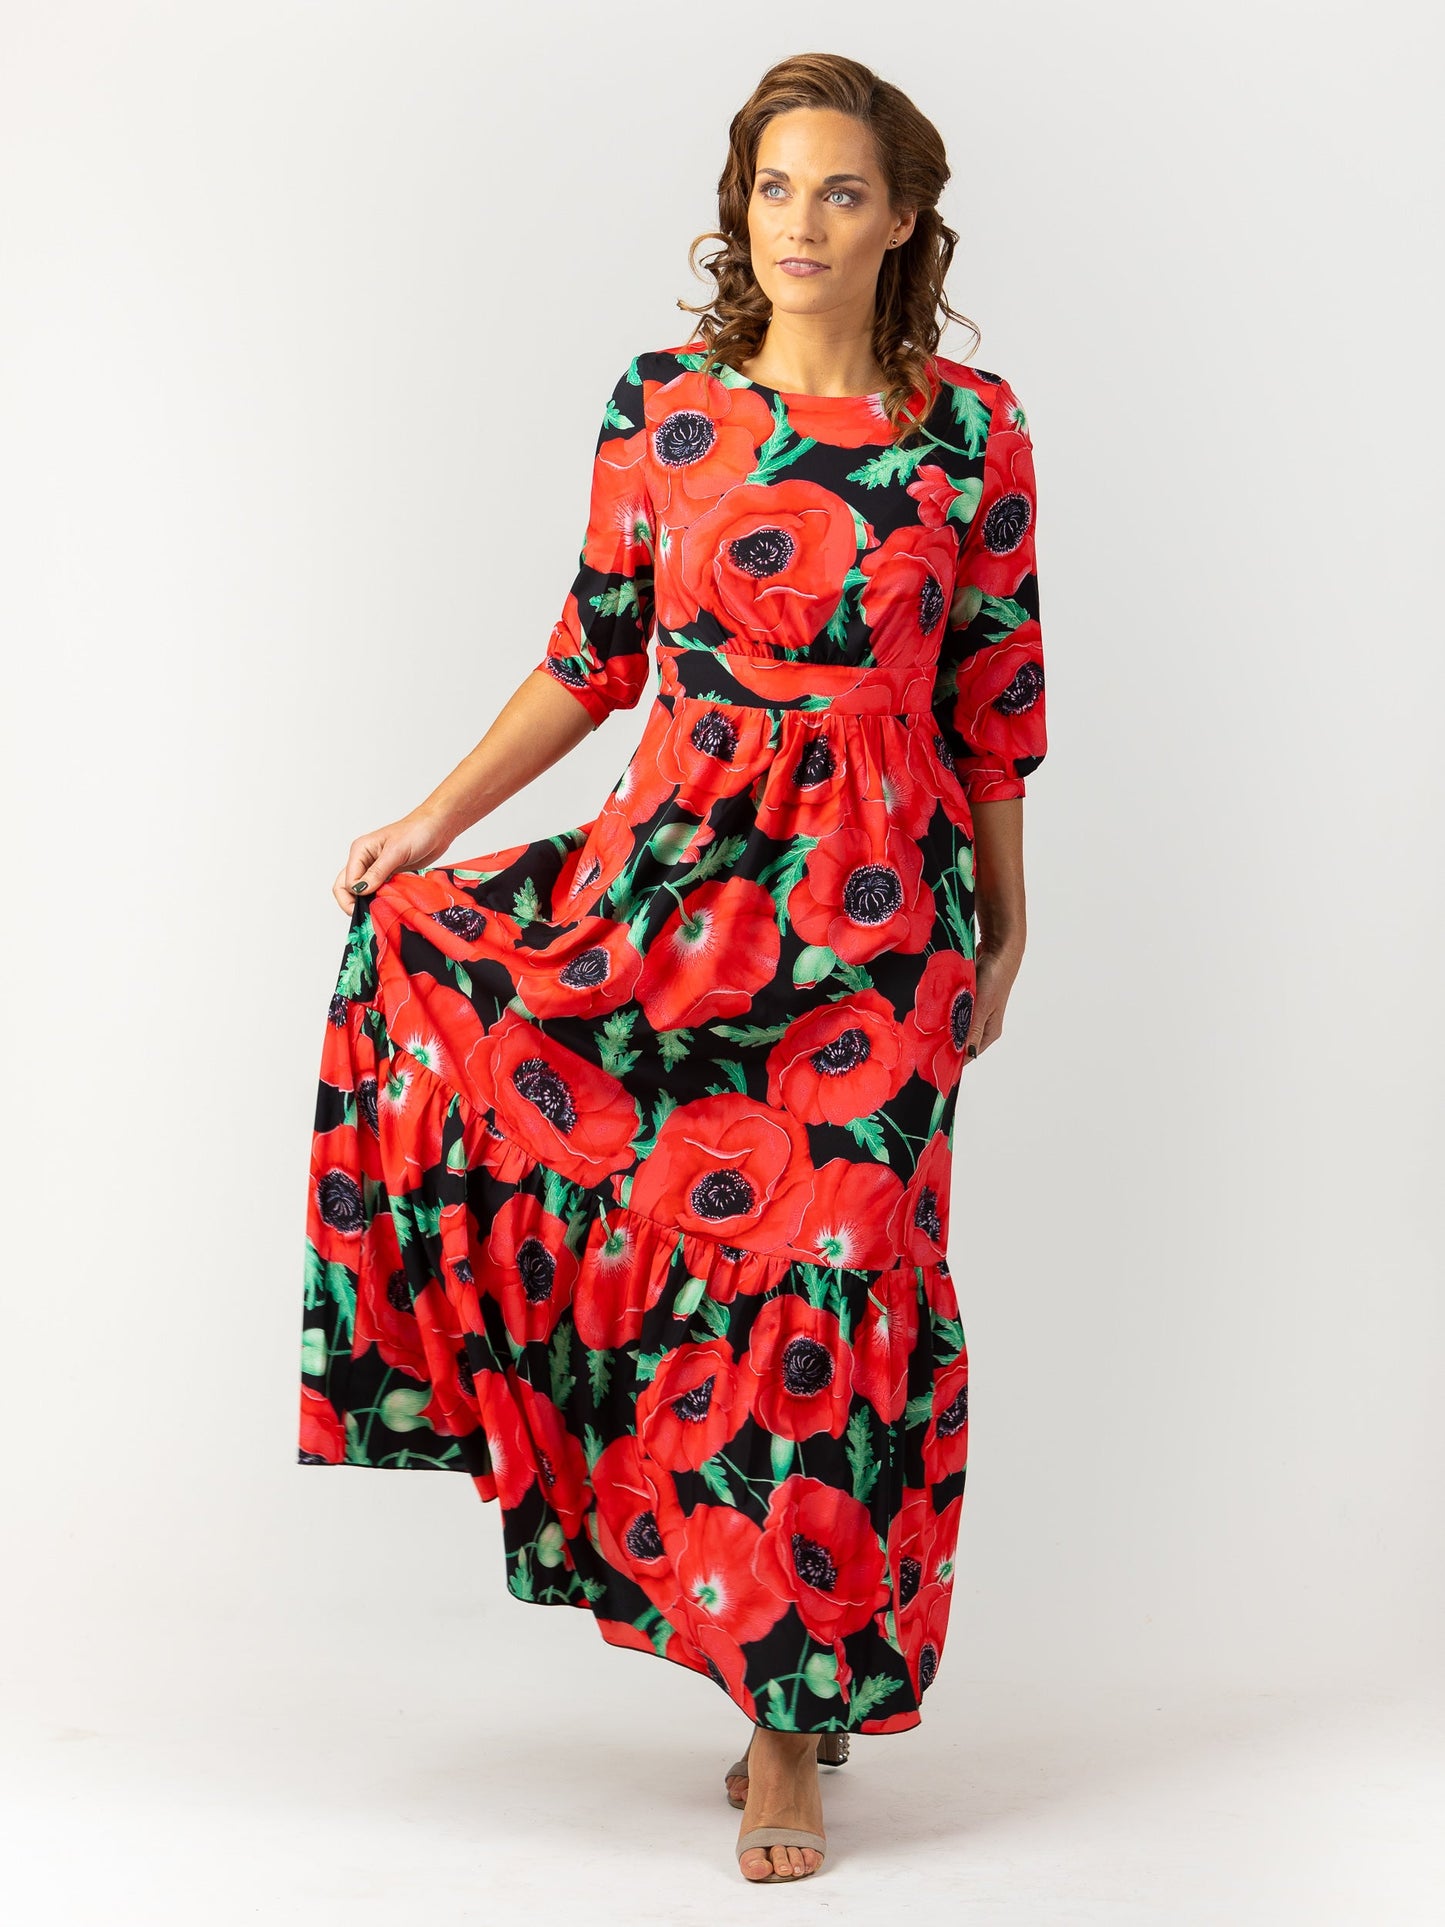 Dress "Lovely poppy" classic style